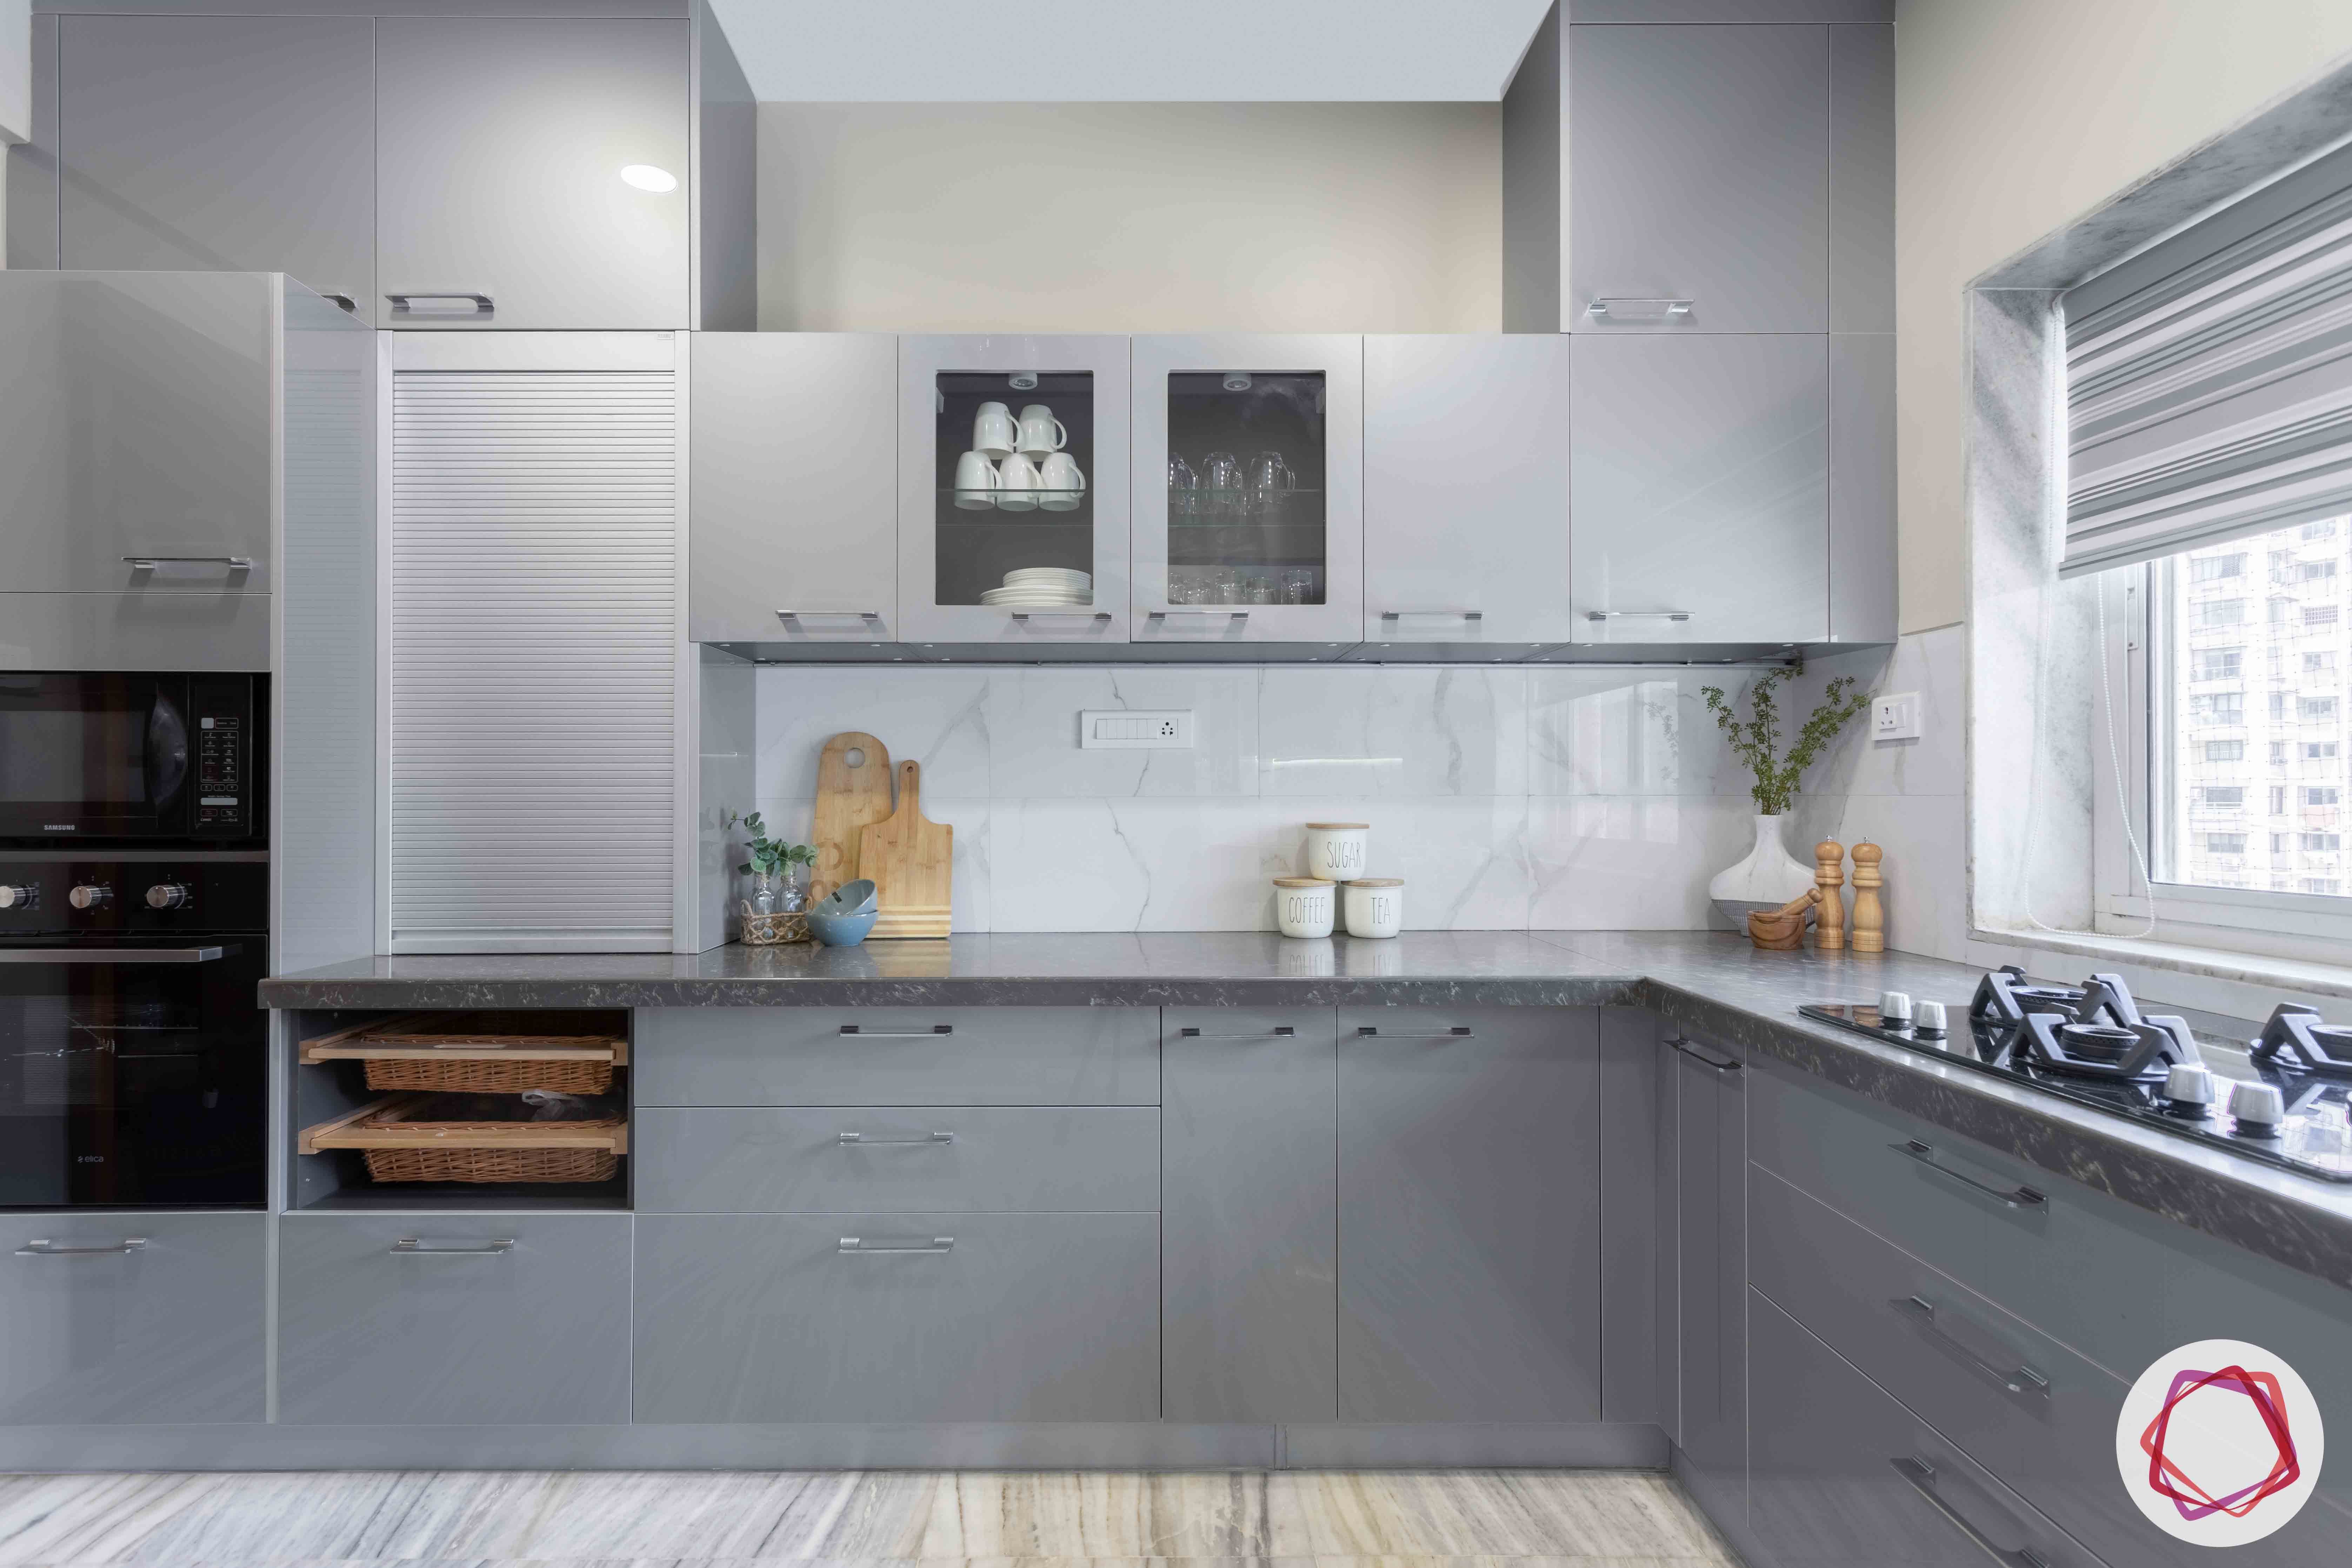 marble-backsplash-grey-kitchen-cabinets-wicker-baskets-stove